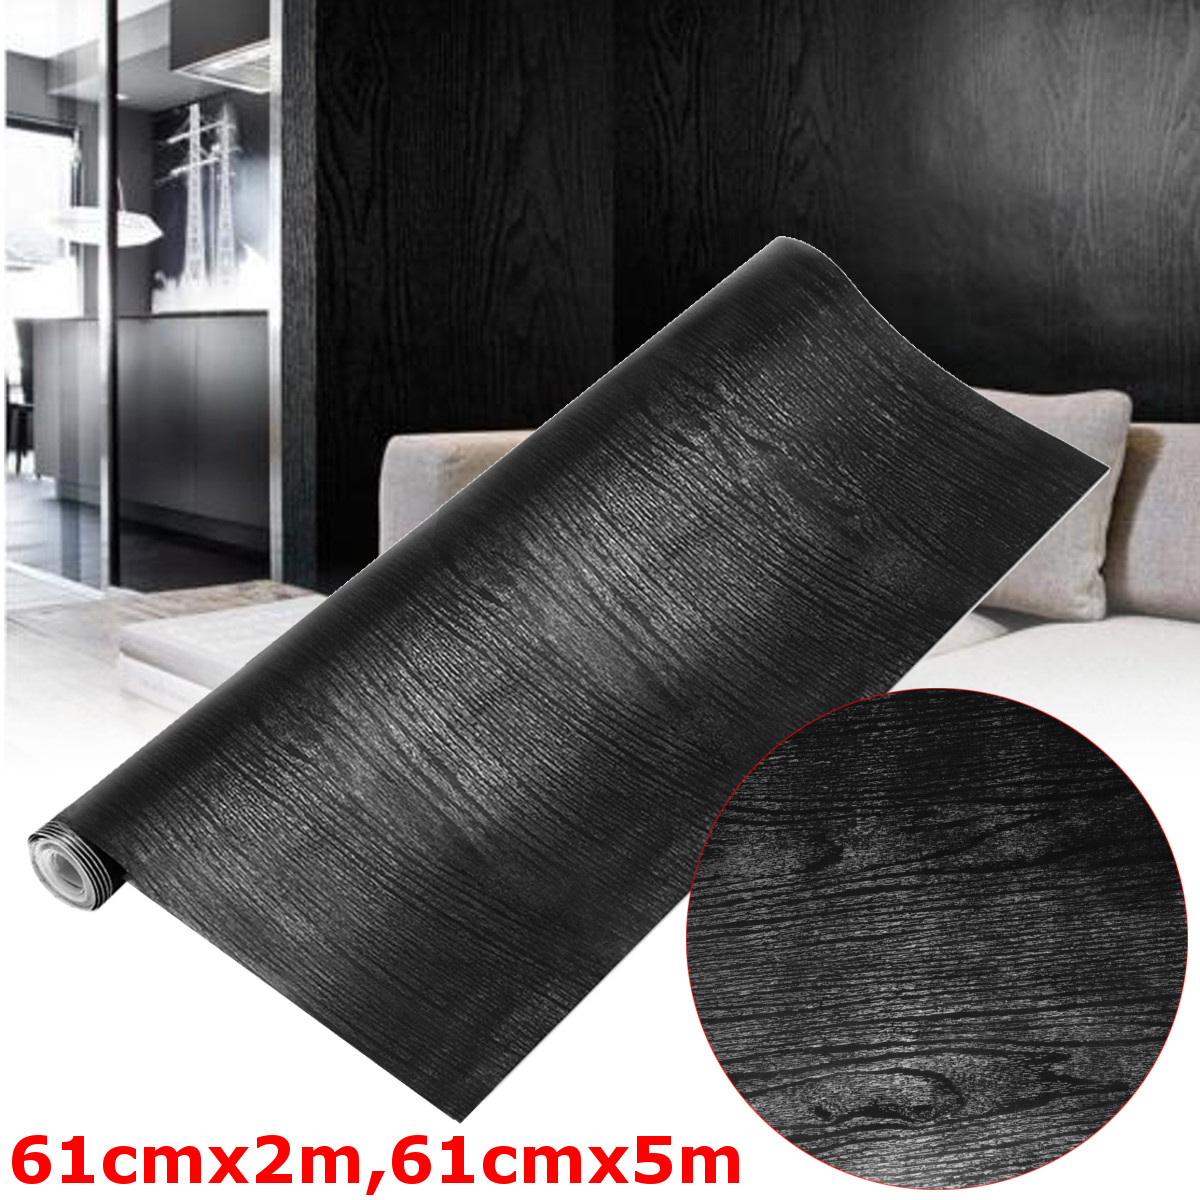 Black-Wood-Looking-Textured-Self-Adhesive-Decor-Contact-Paper-Vinyl-Shelf-Liner-Wall-Paper-1304238-1